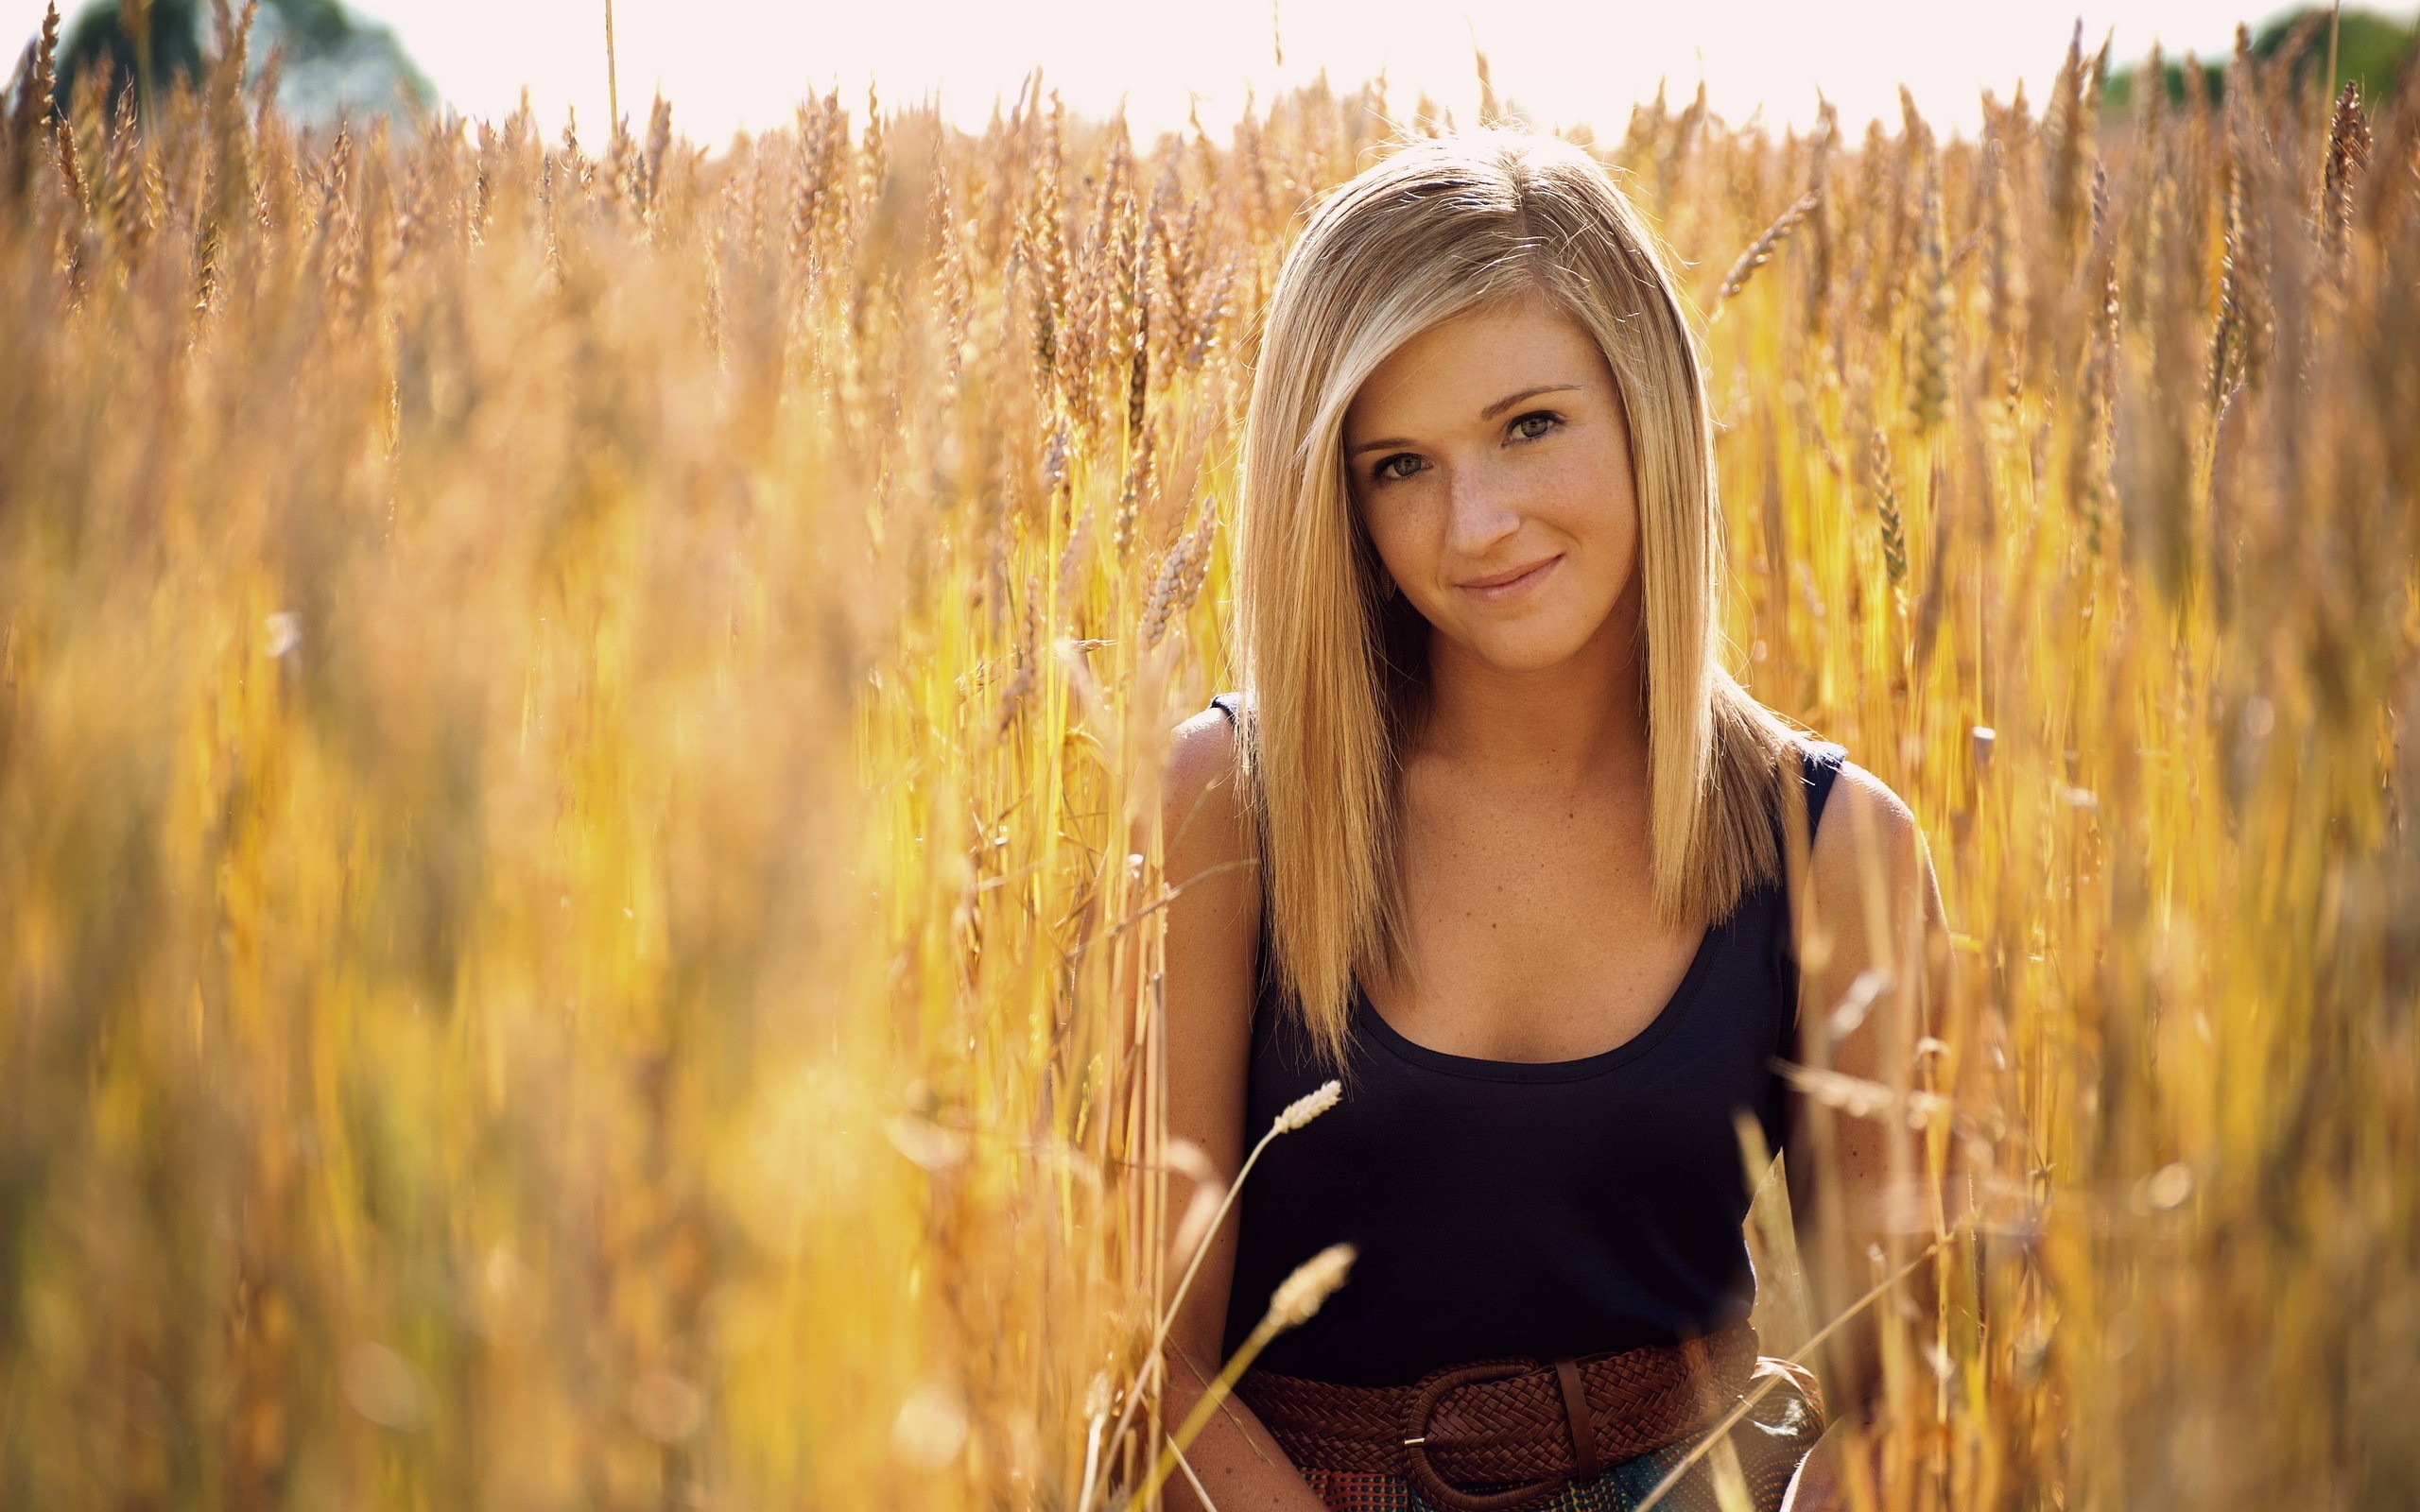 Smiling Blonde Women Model Women Outdoors Tank Top Field Grain Spikelets Belt Plants Looking At View 2560x1600